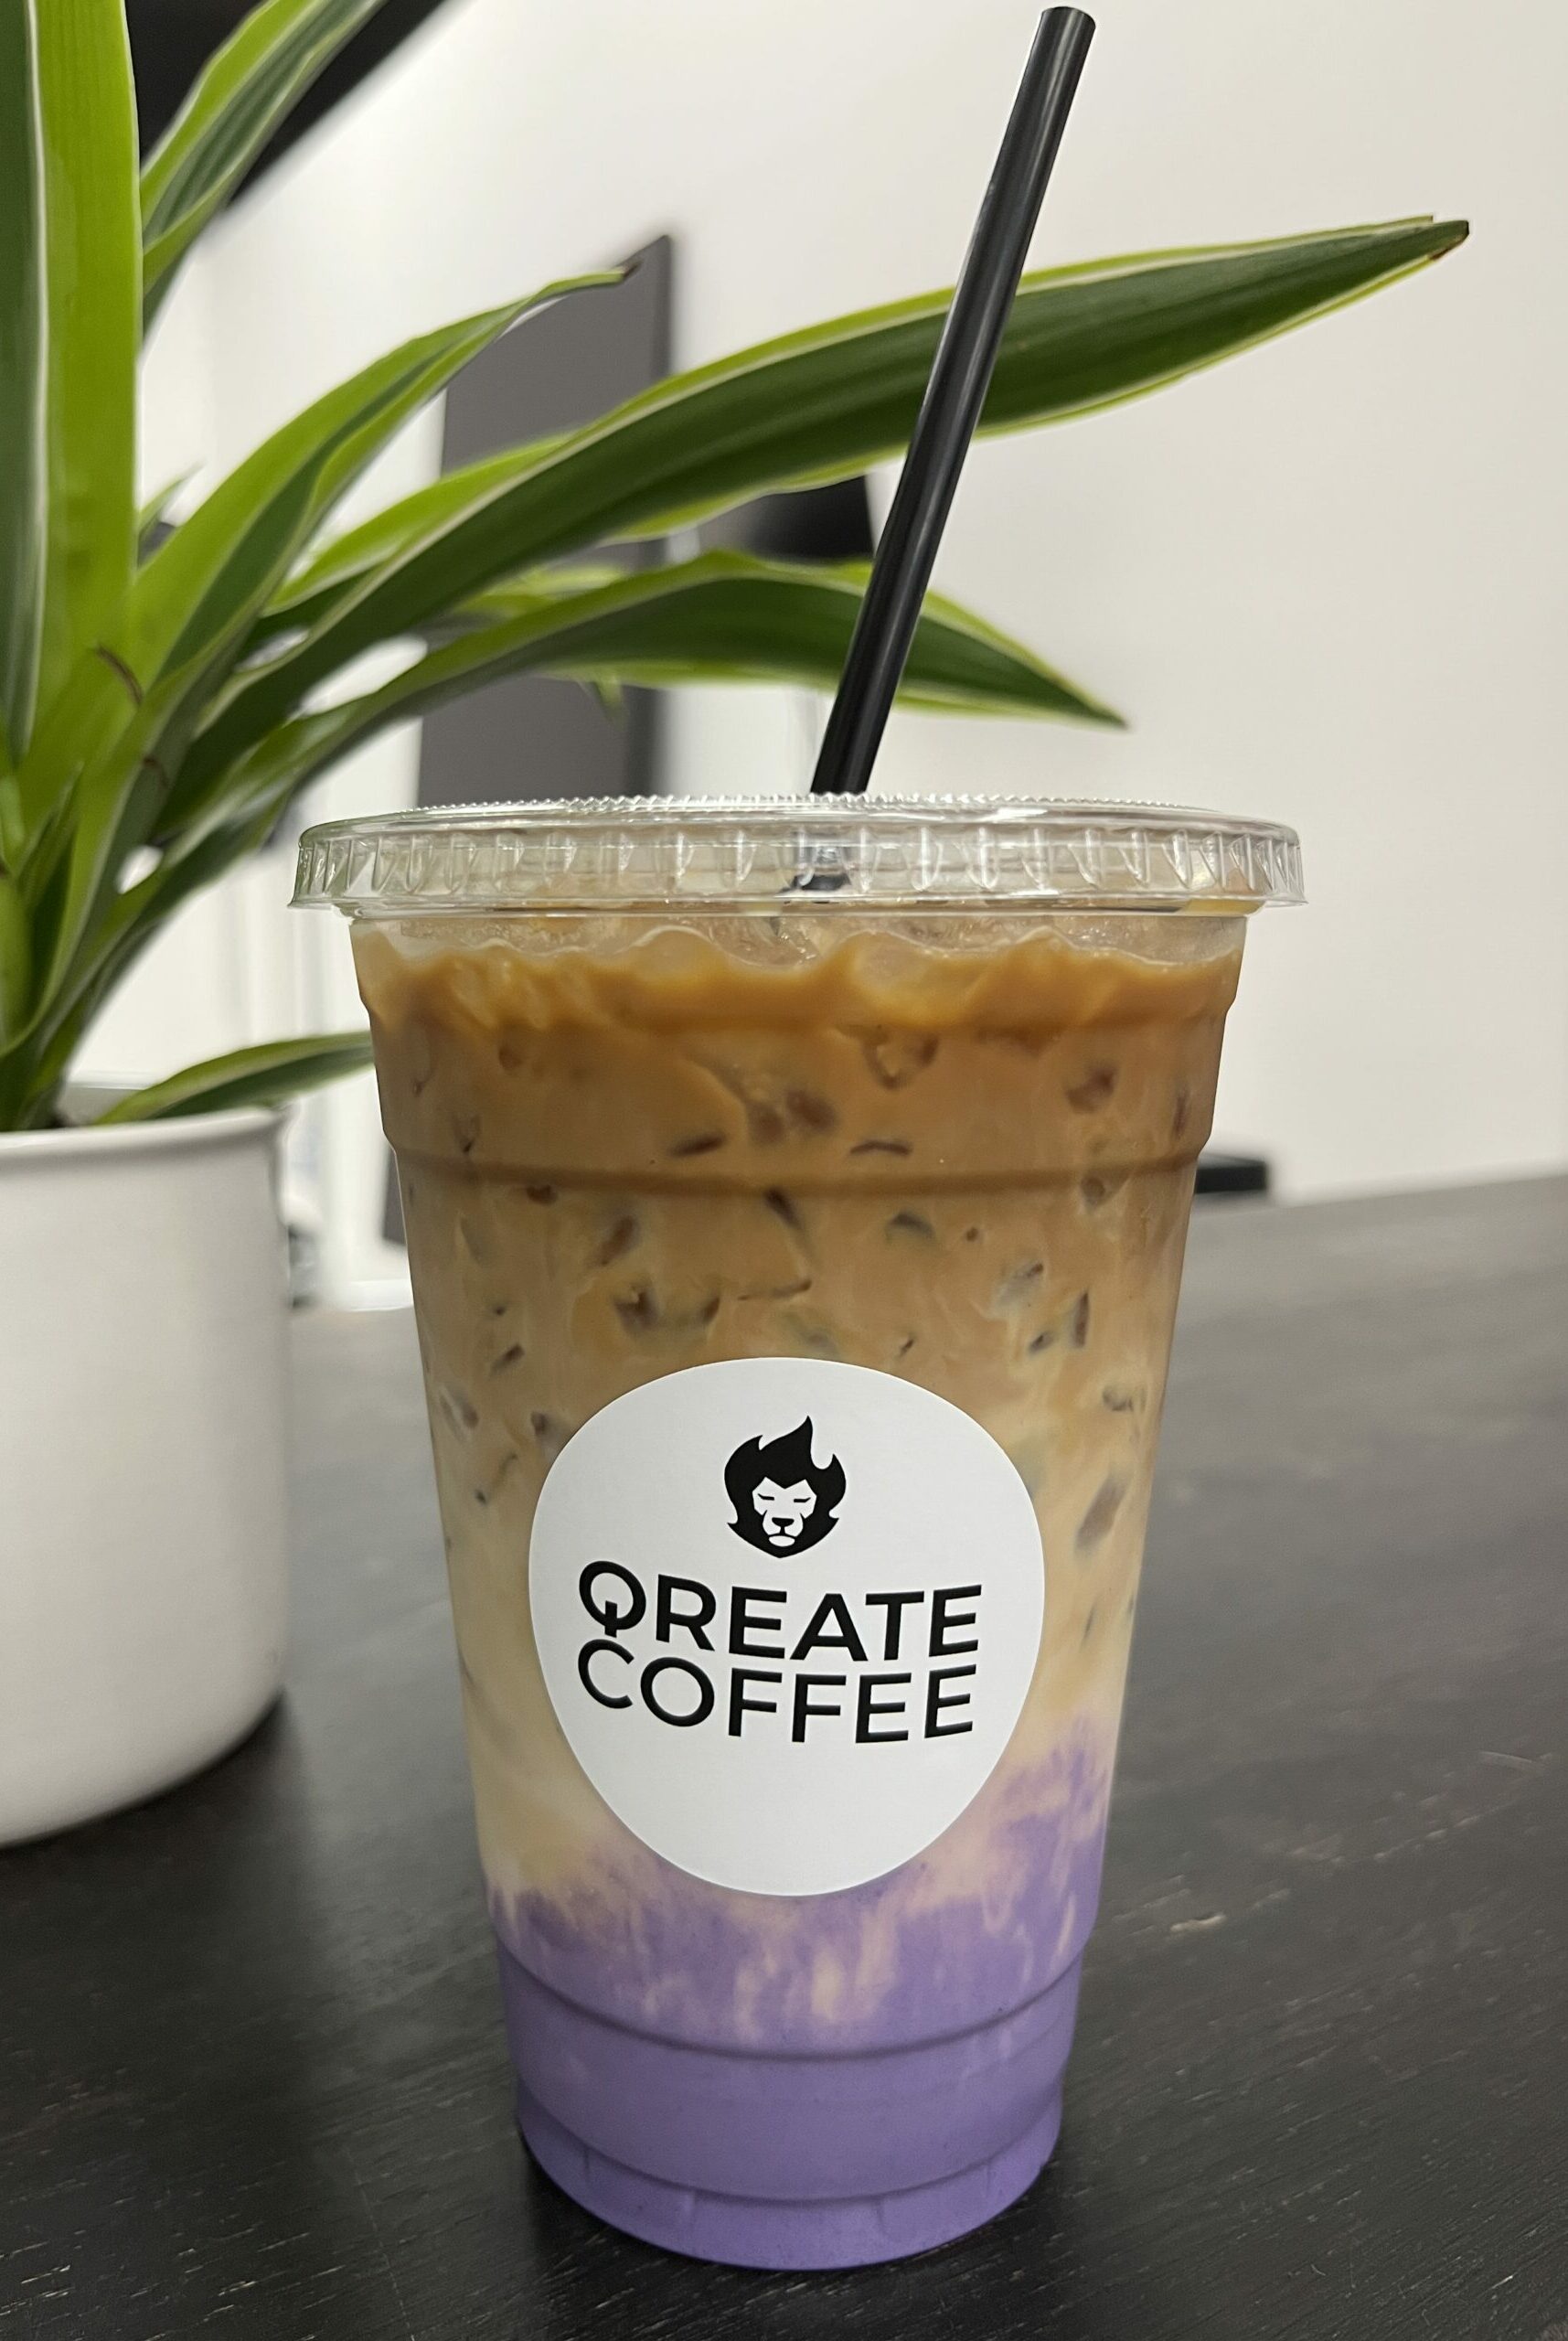 Qcreate Coffee